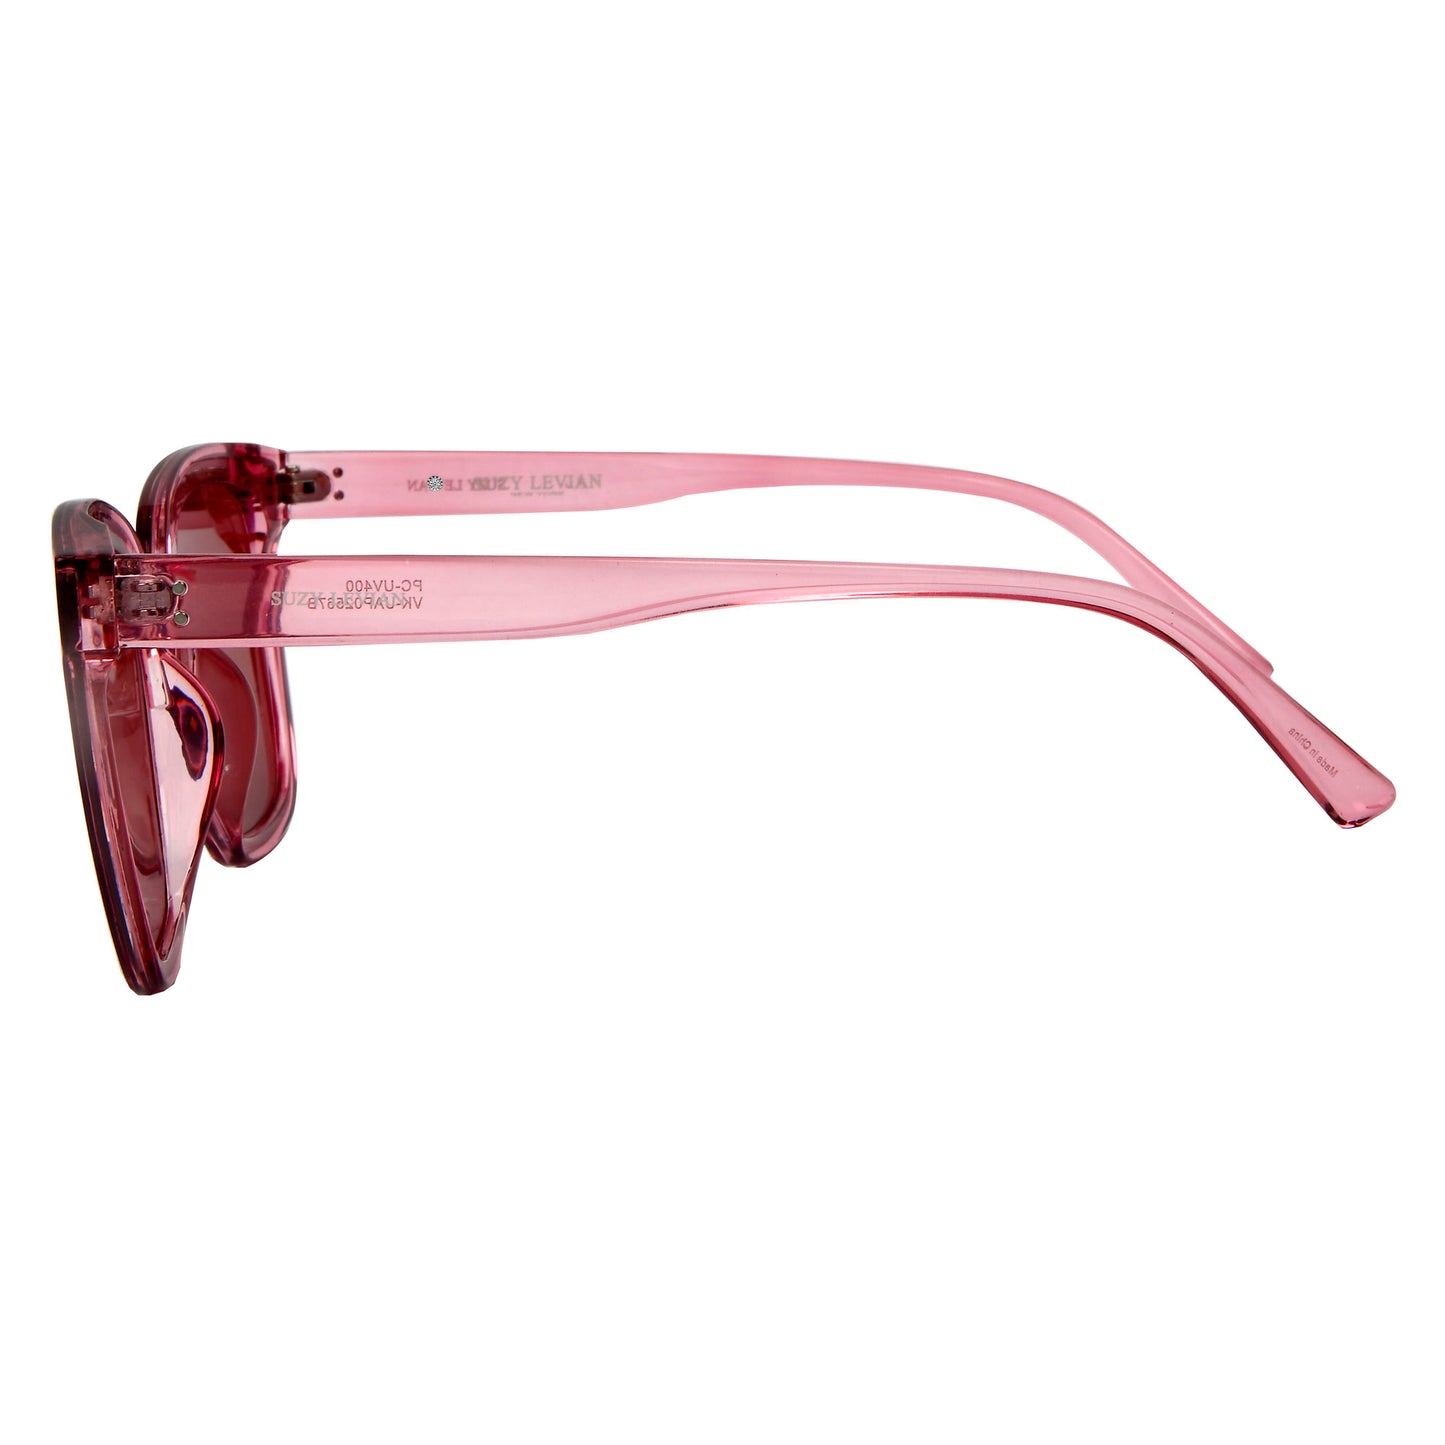 Suzy Levian Women's Light Pink Oversize Square Lens Silver Accent Sunglasses